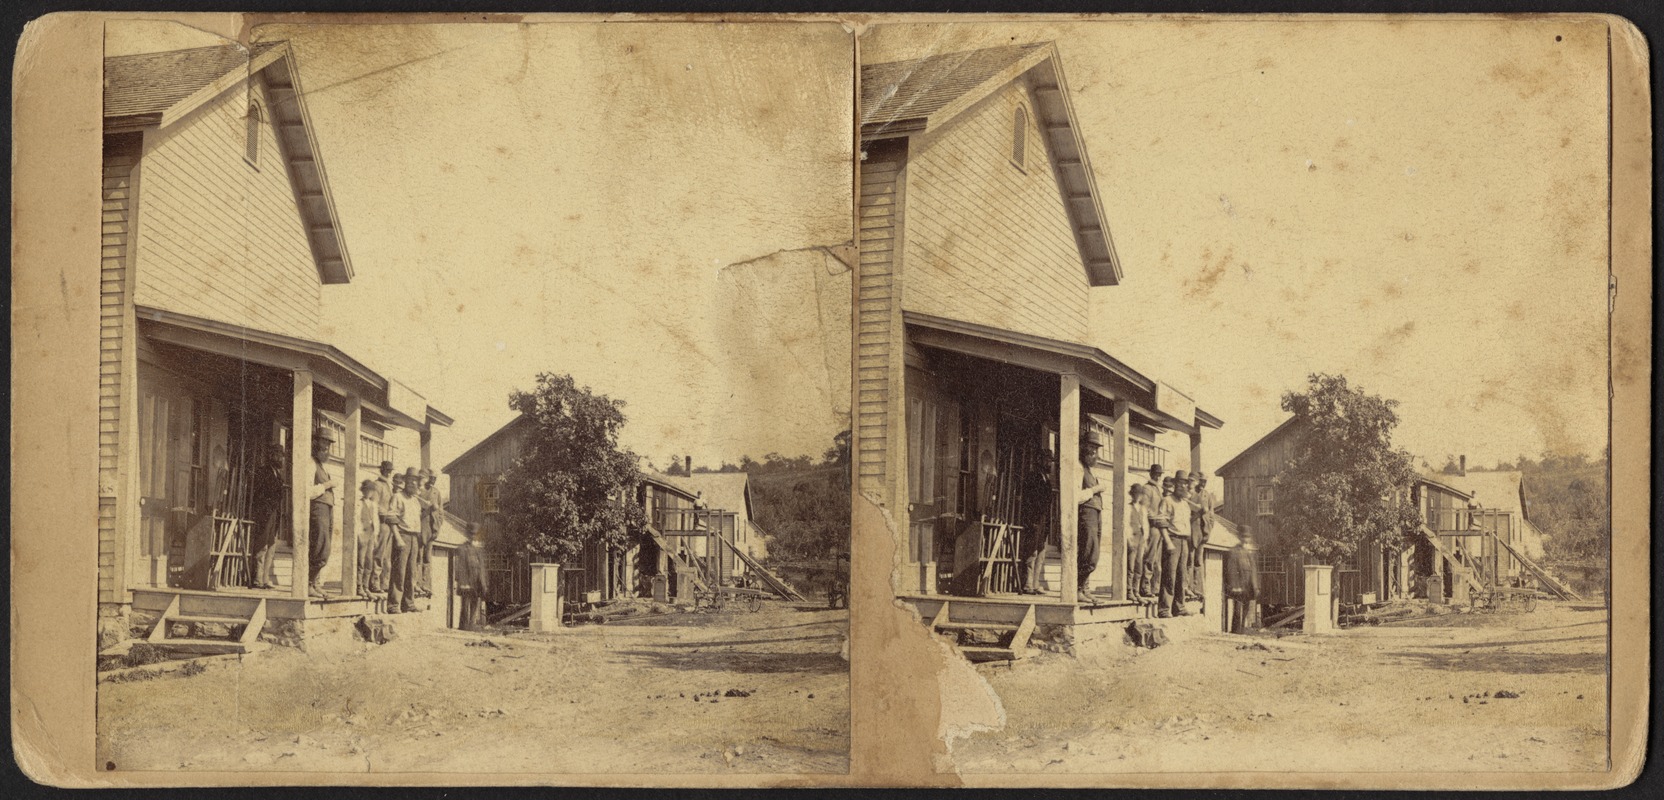 Unidentified men standing on porch in rural town